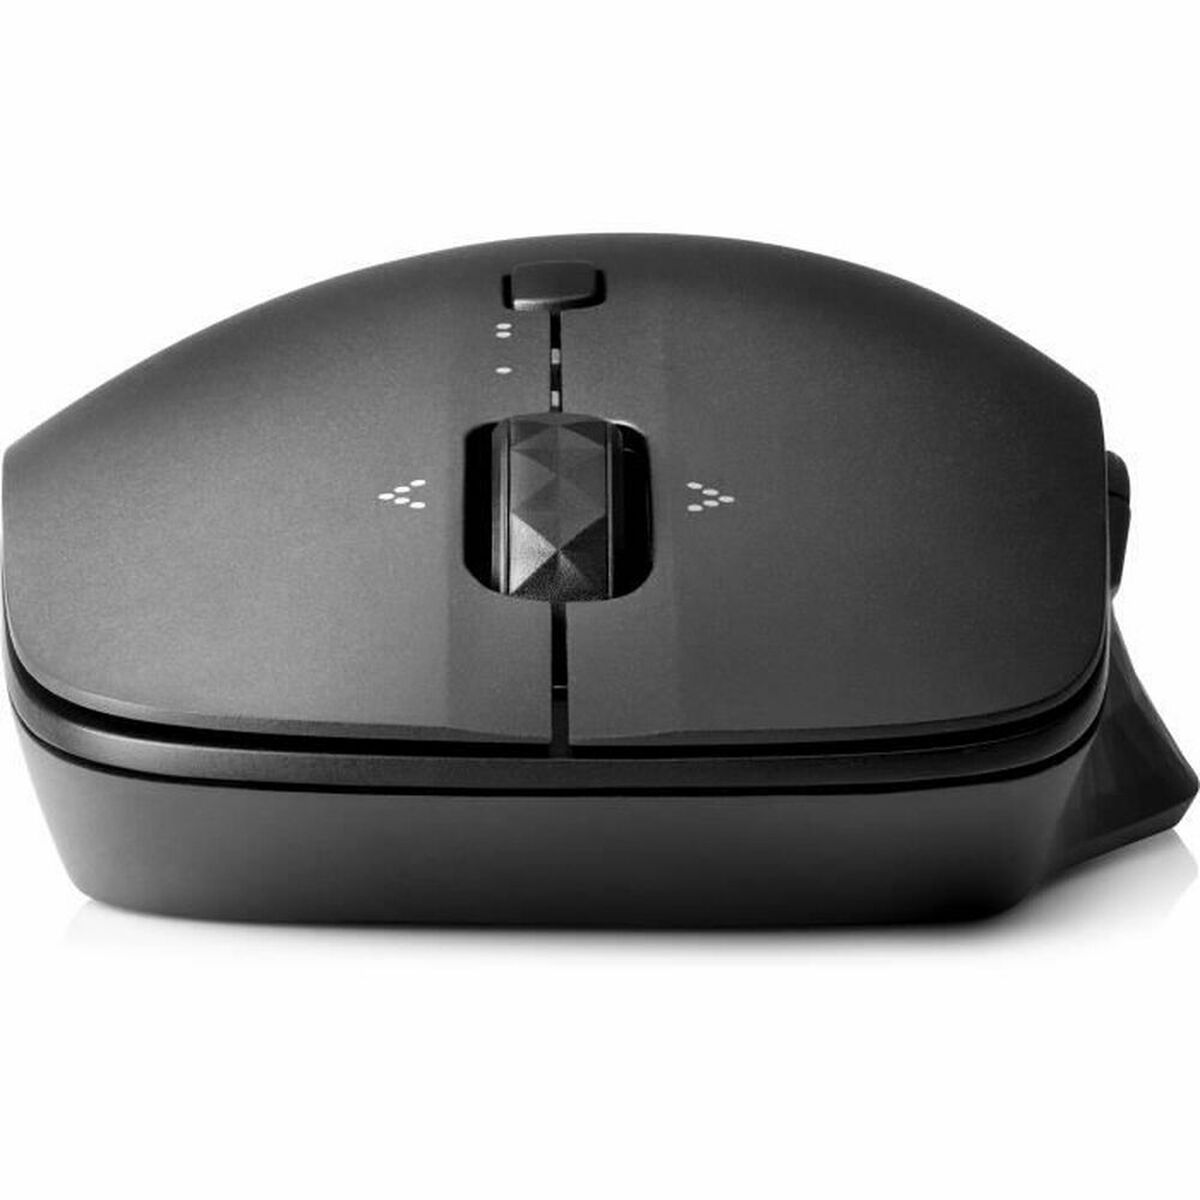 Mouse Fără Fir HP Bluetooth Travel Negru